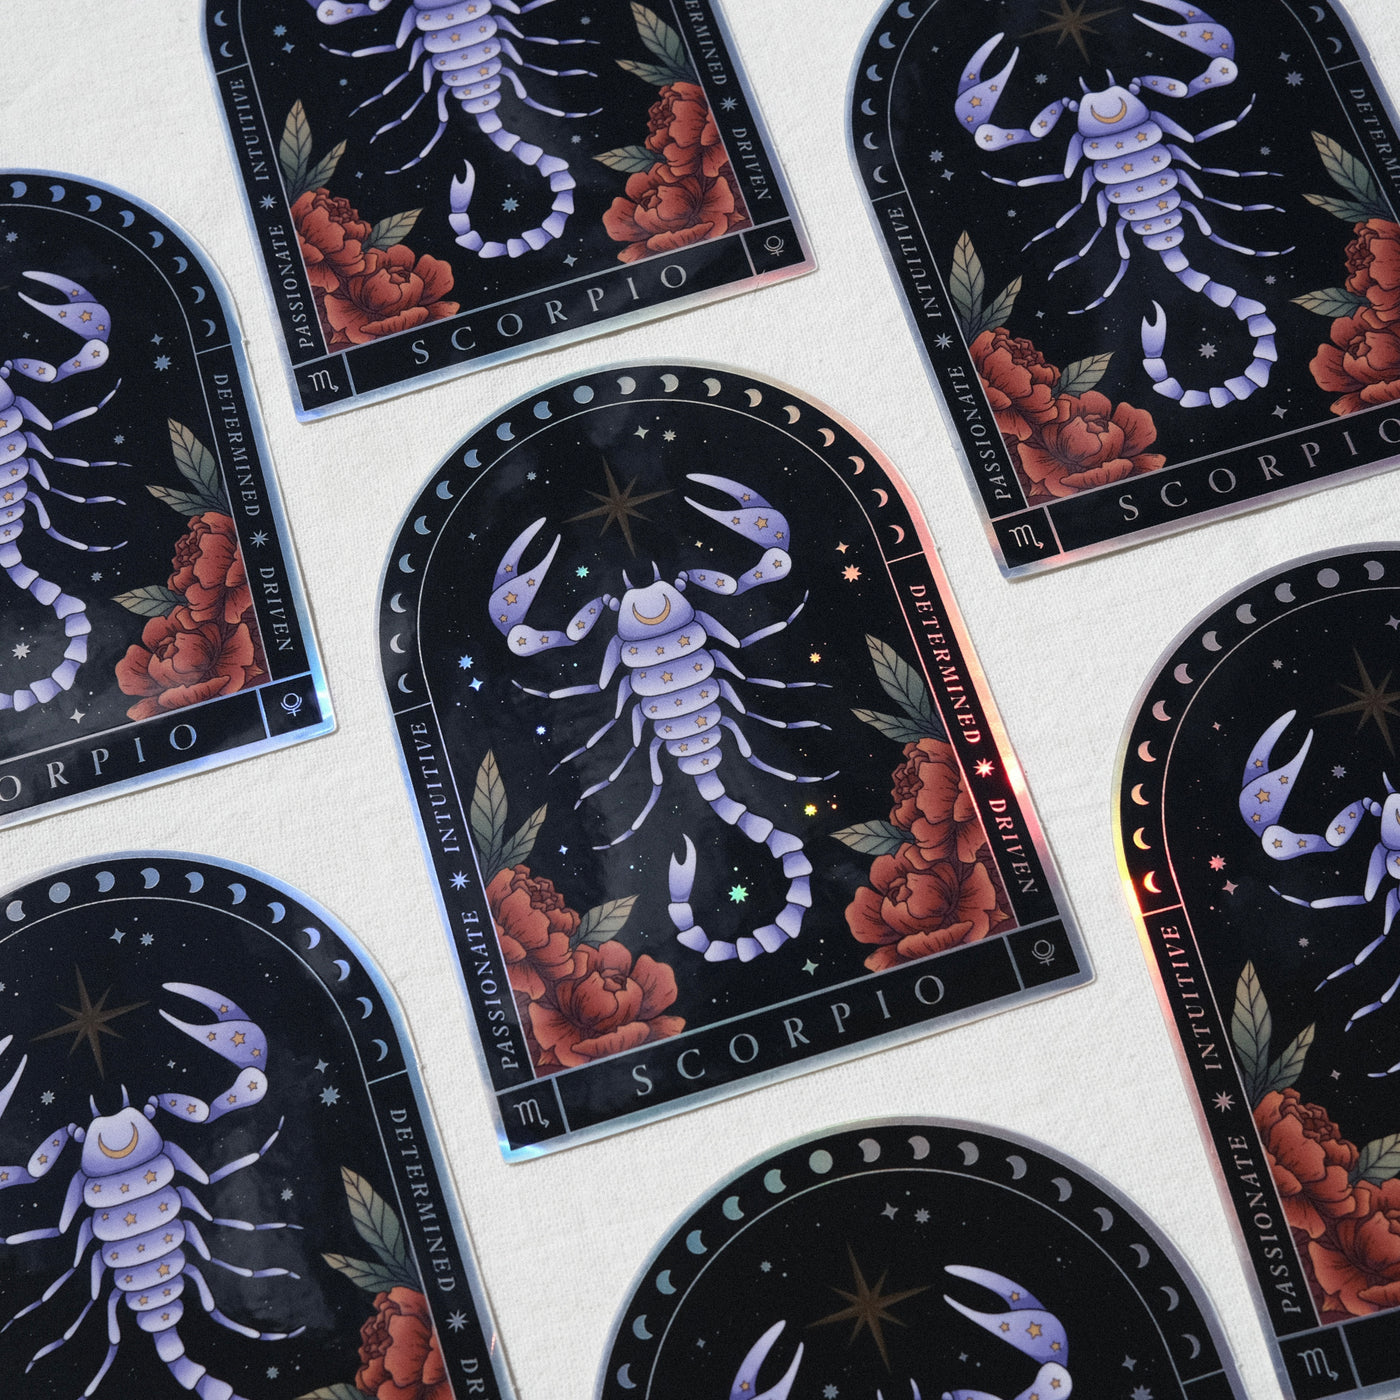 Scorpio Holographic Sticker